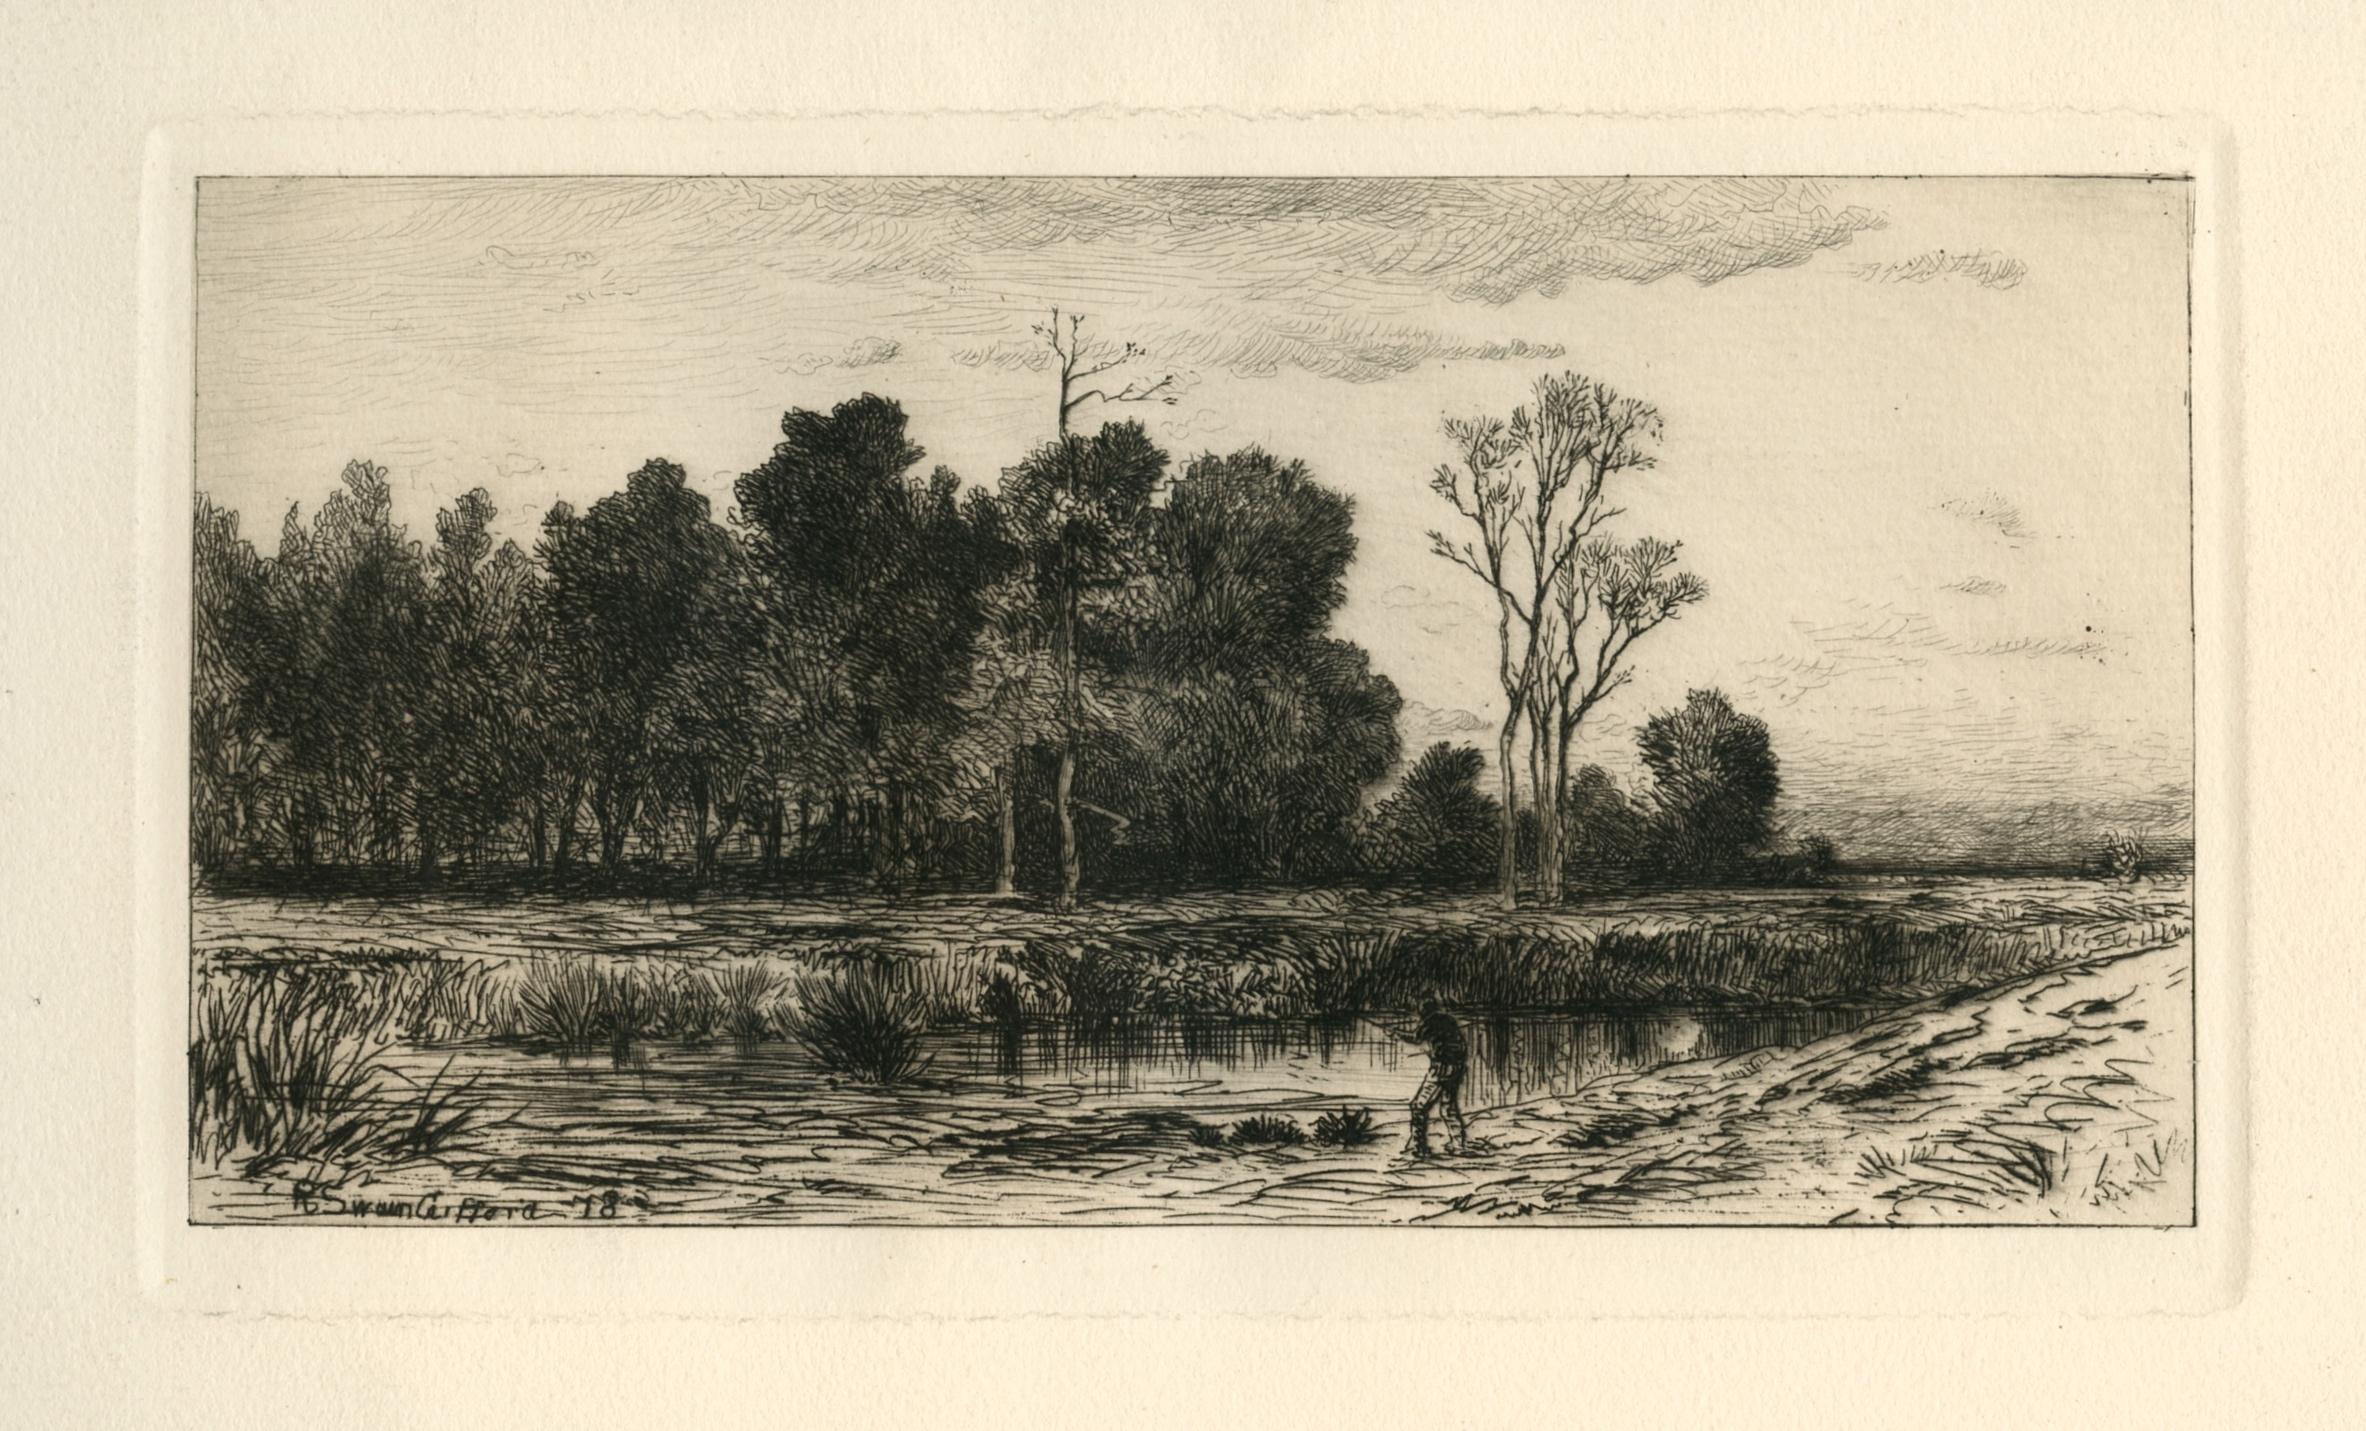 Robert Swain Gifford Landscape Print - "Evening" original etching